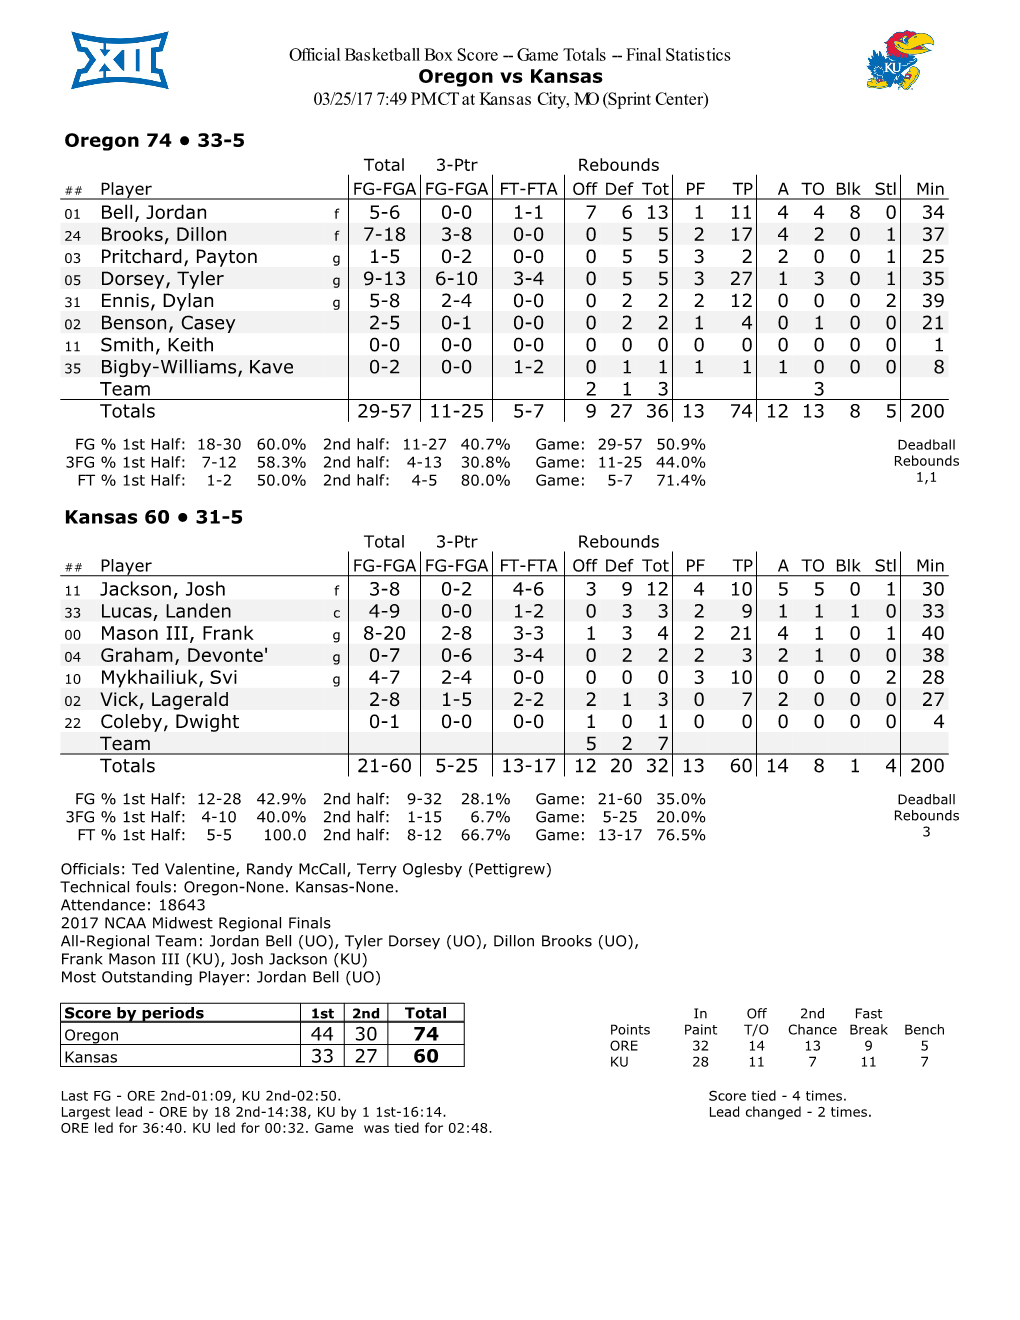 Official Basketball Box Score -- Game Totals -- Final Statistics Oregon Vs Kansas 03/25/17 7:49 PM CT at Kansas City, MO (Sprint Center)